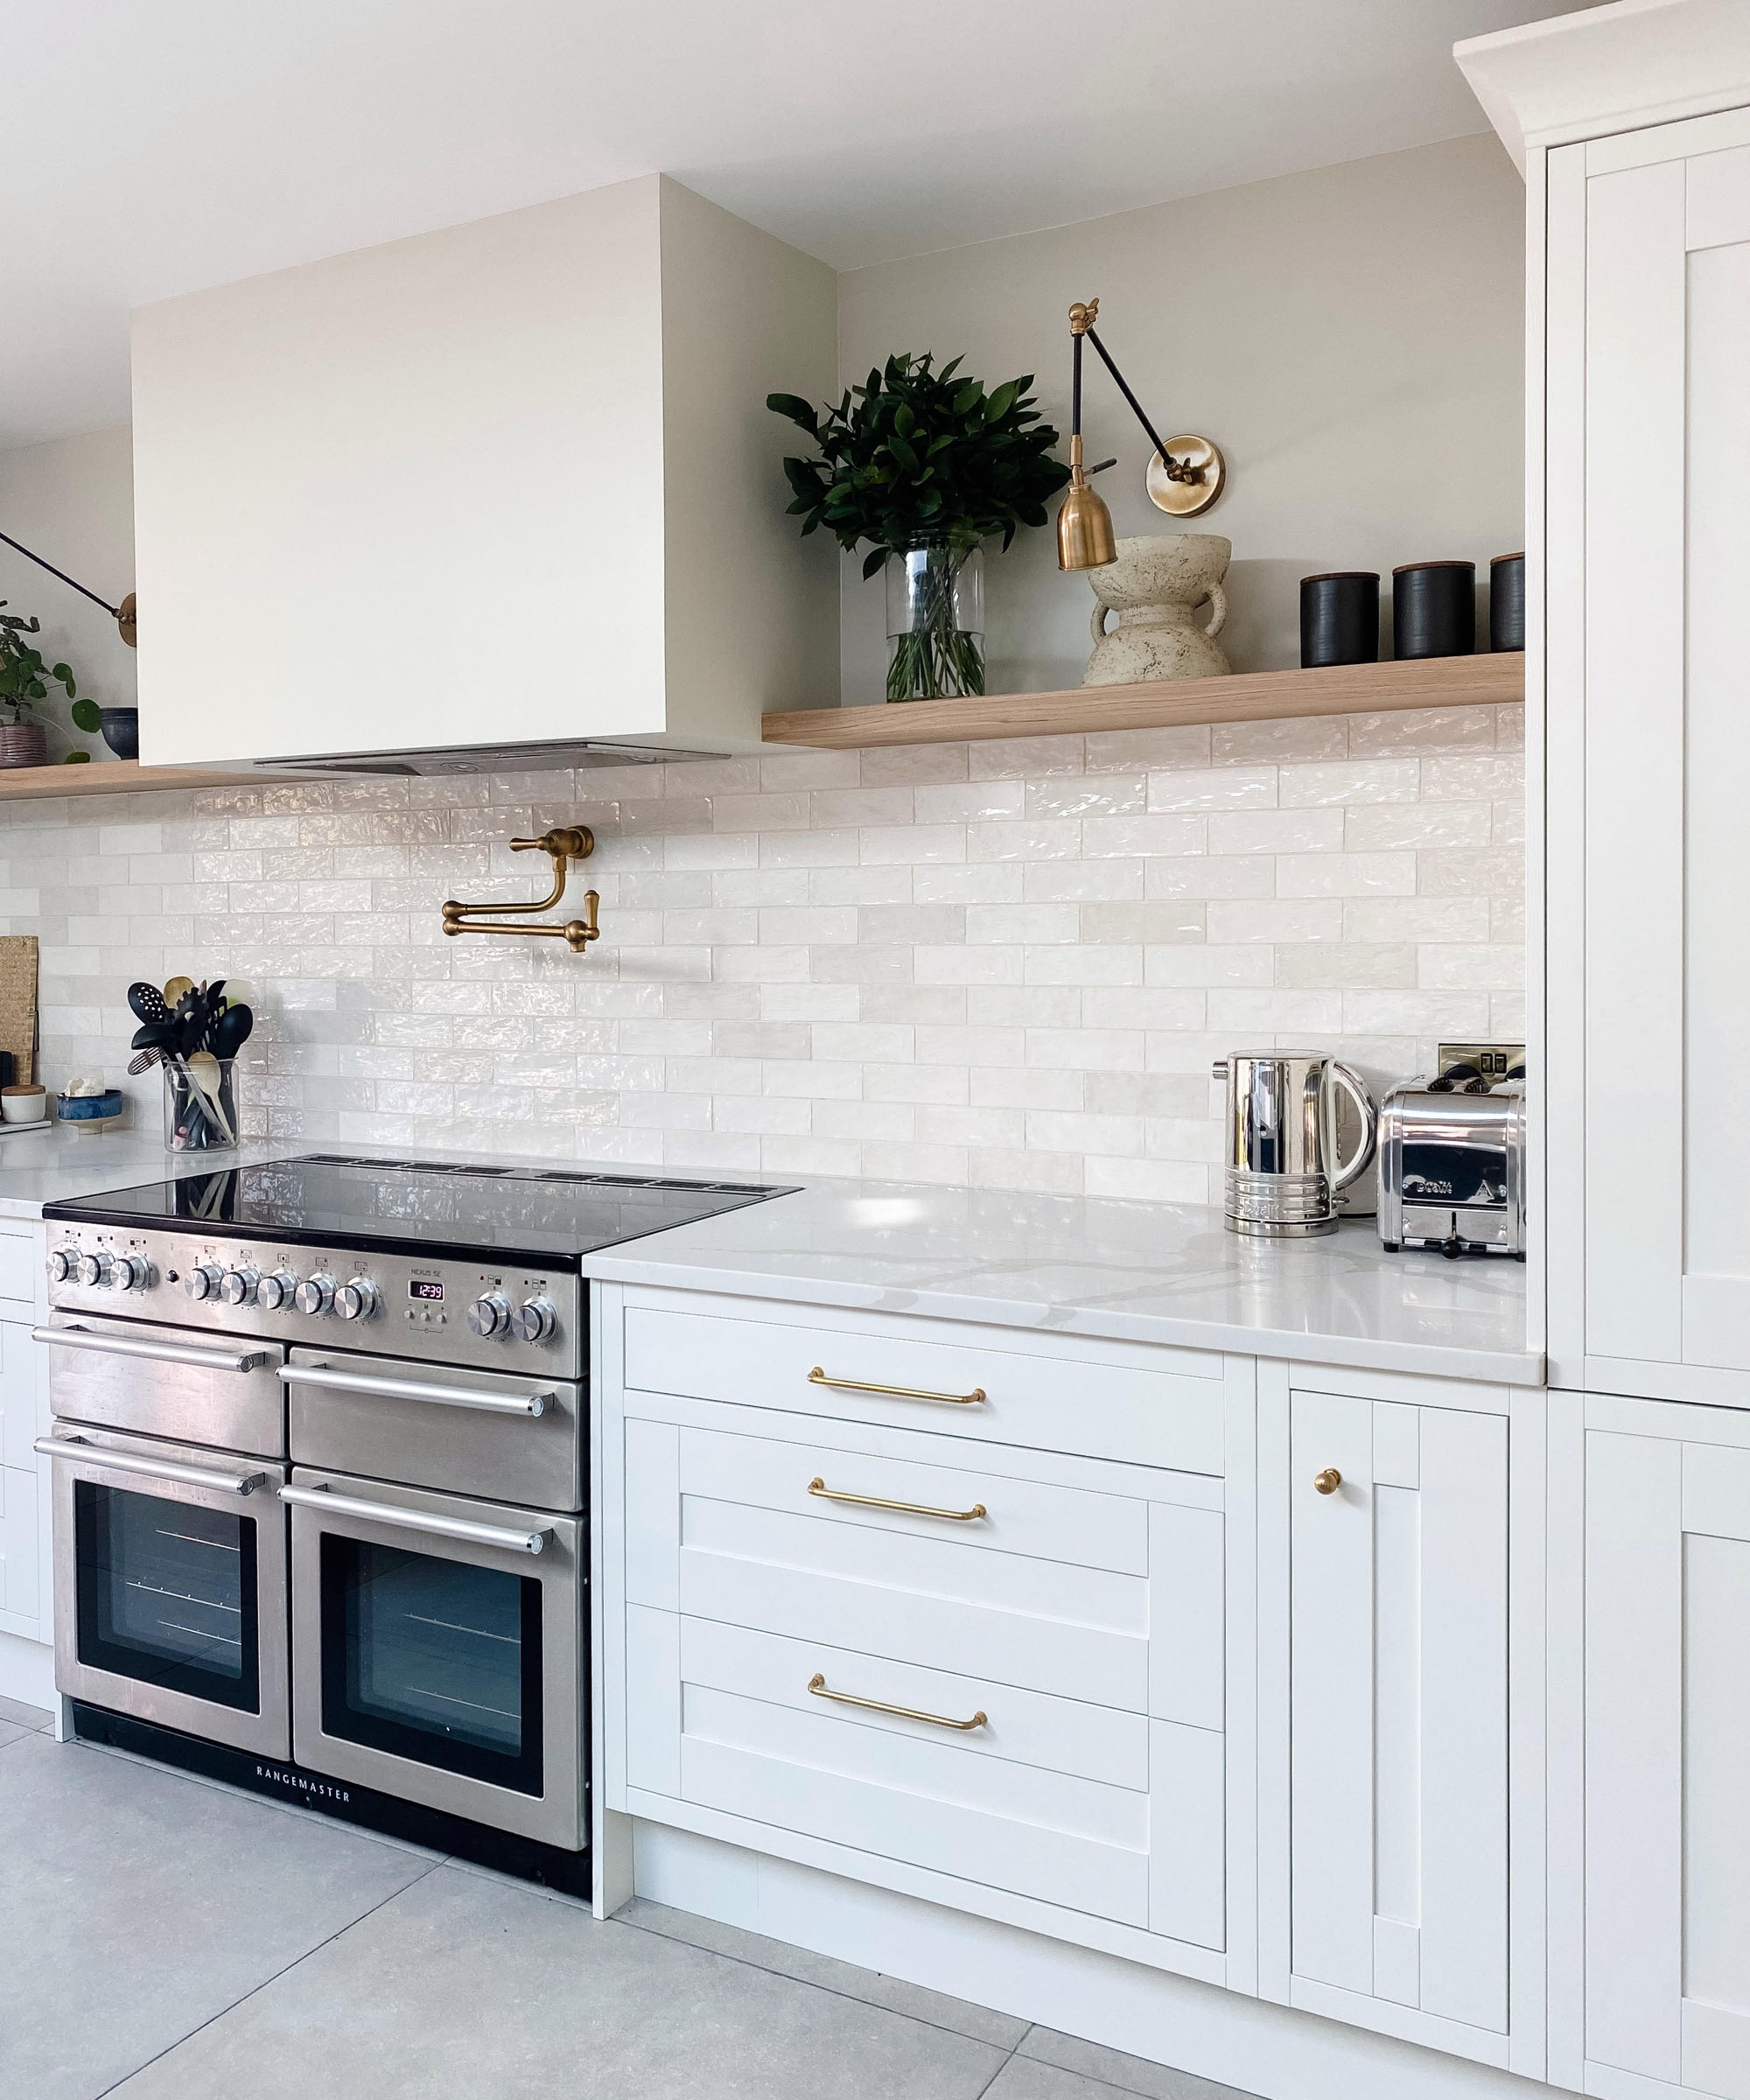 White kitchen backsplash ideas: 10 stylish neutral backdrops | Homes ...